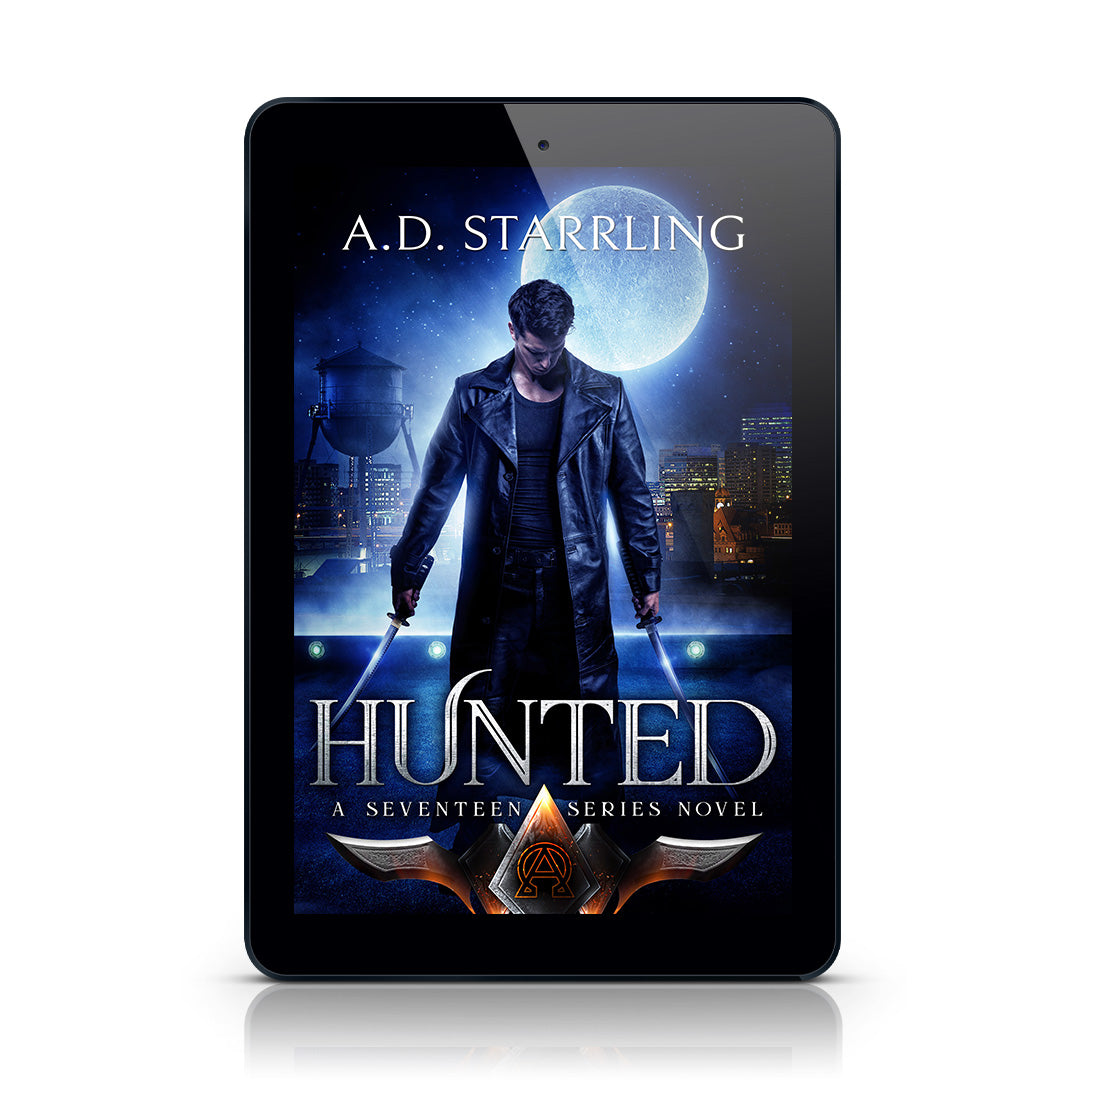 Hunted (Seventeen Series Book 1) EBOOK supernatural thriller urban fantasy author ad starrling